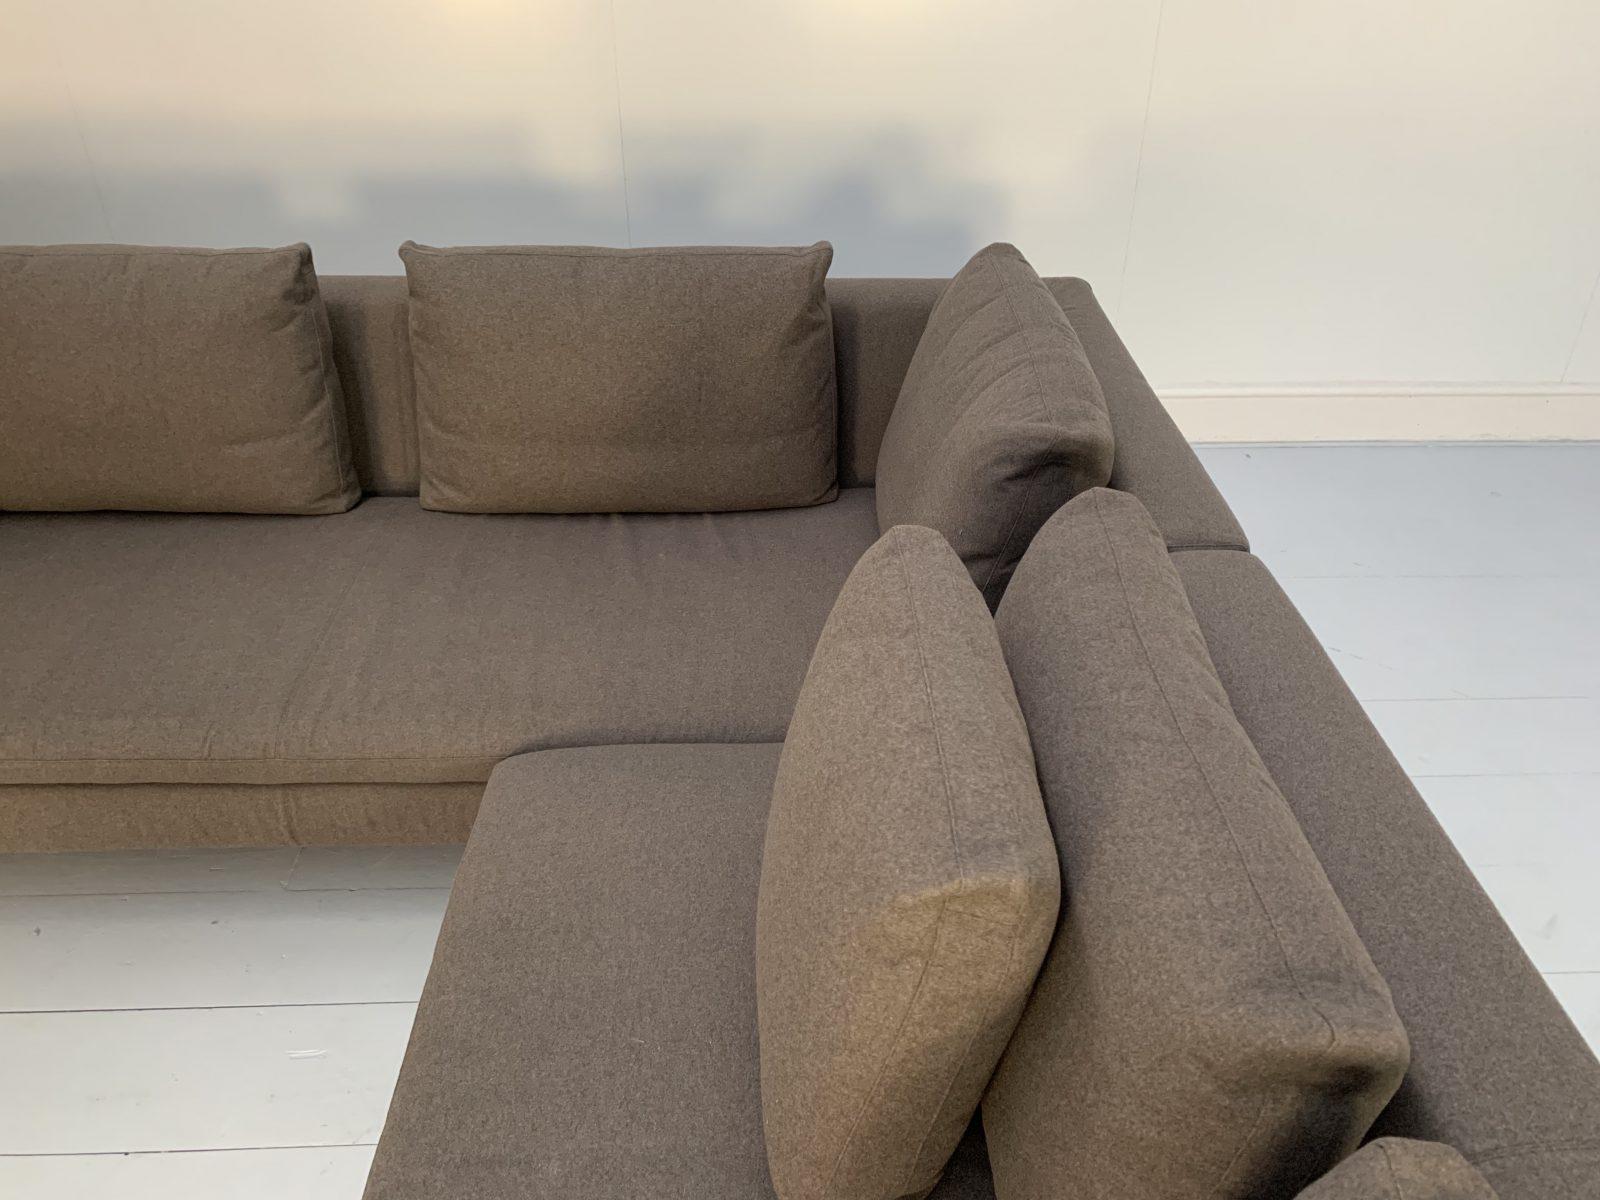 B&B Italia “Charles” L-Shape Sectional Sofa in Beige “Serra” Cashmere For Sale 5